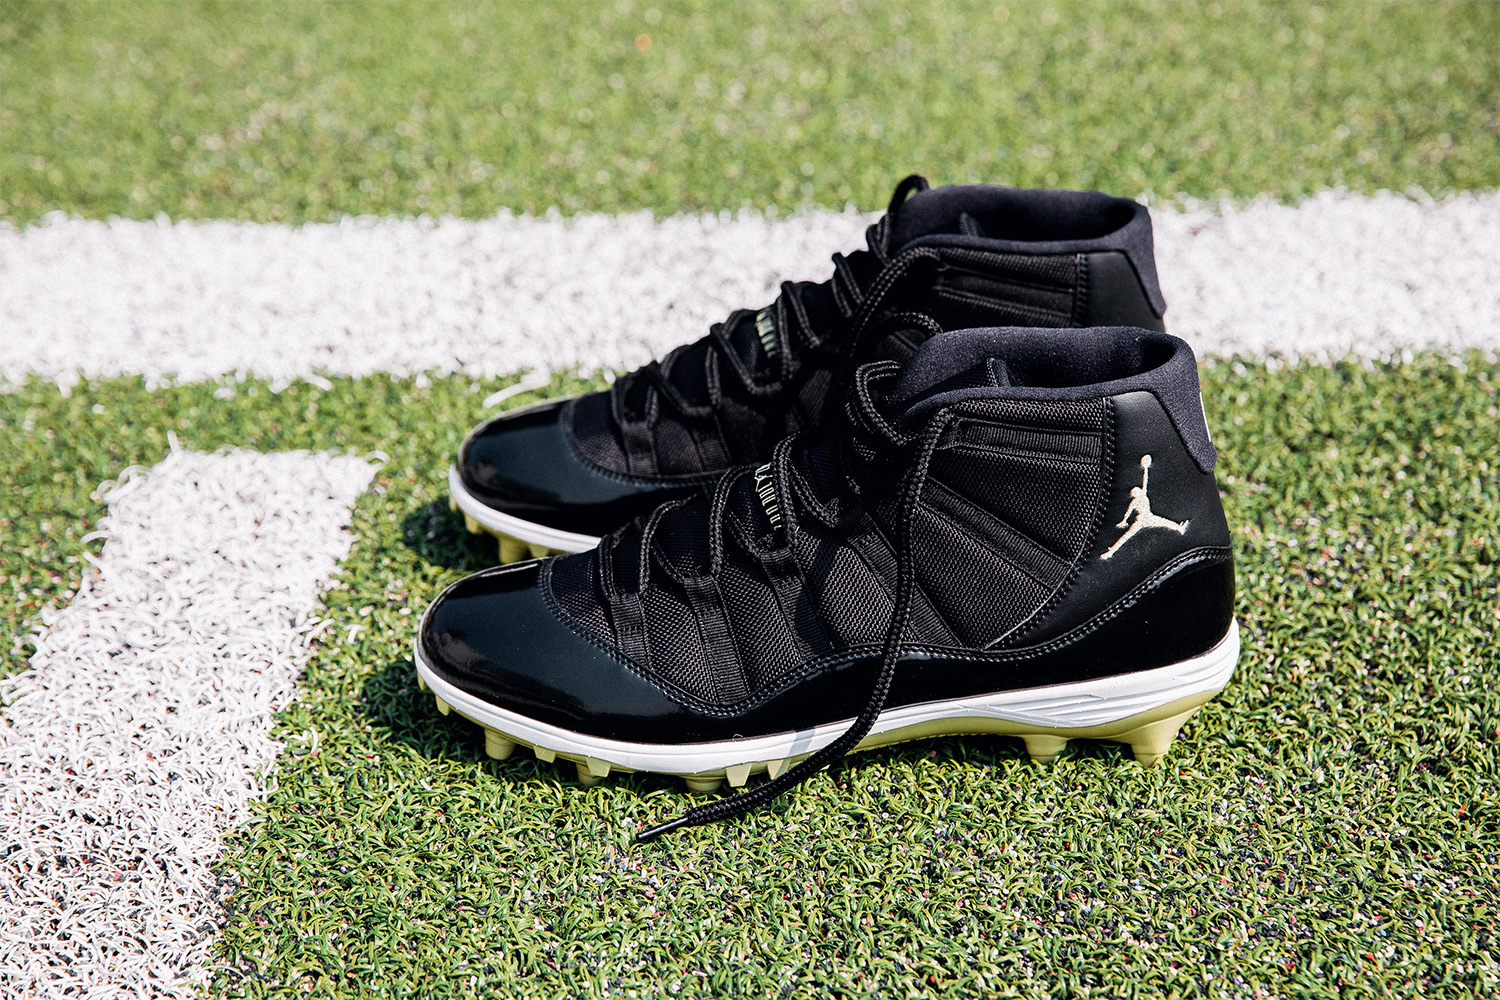 Jordan Brand NFL PLayers will wear Air Jordan VI inspired cleats